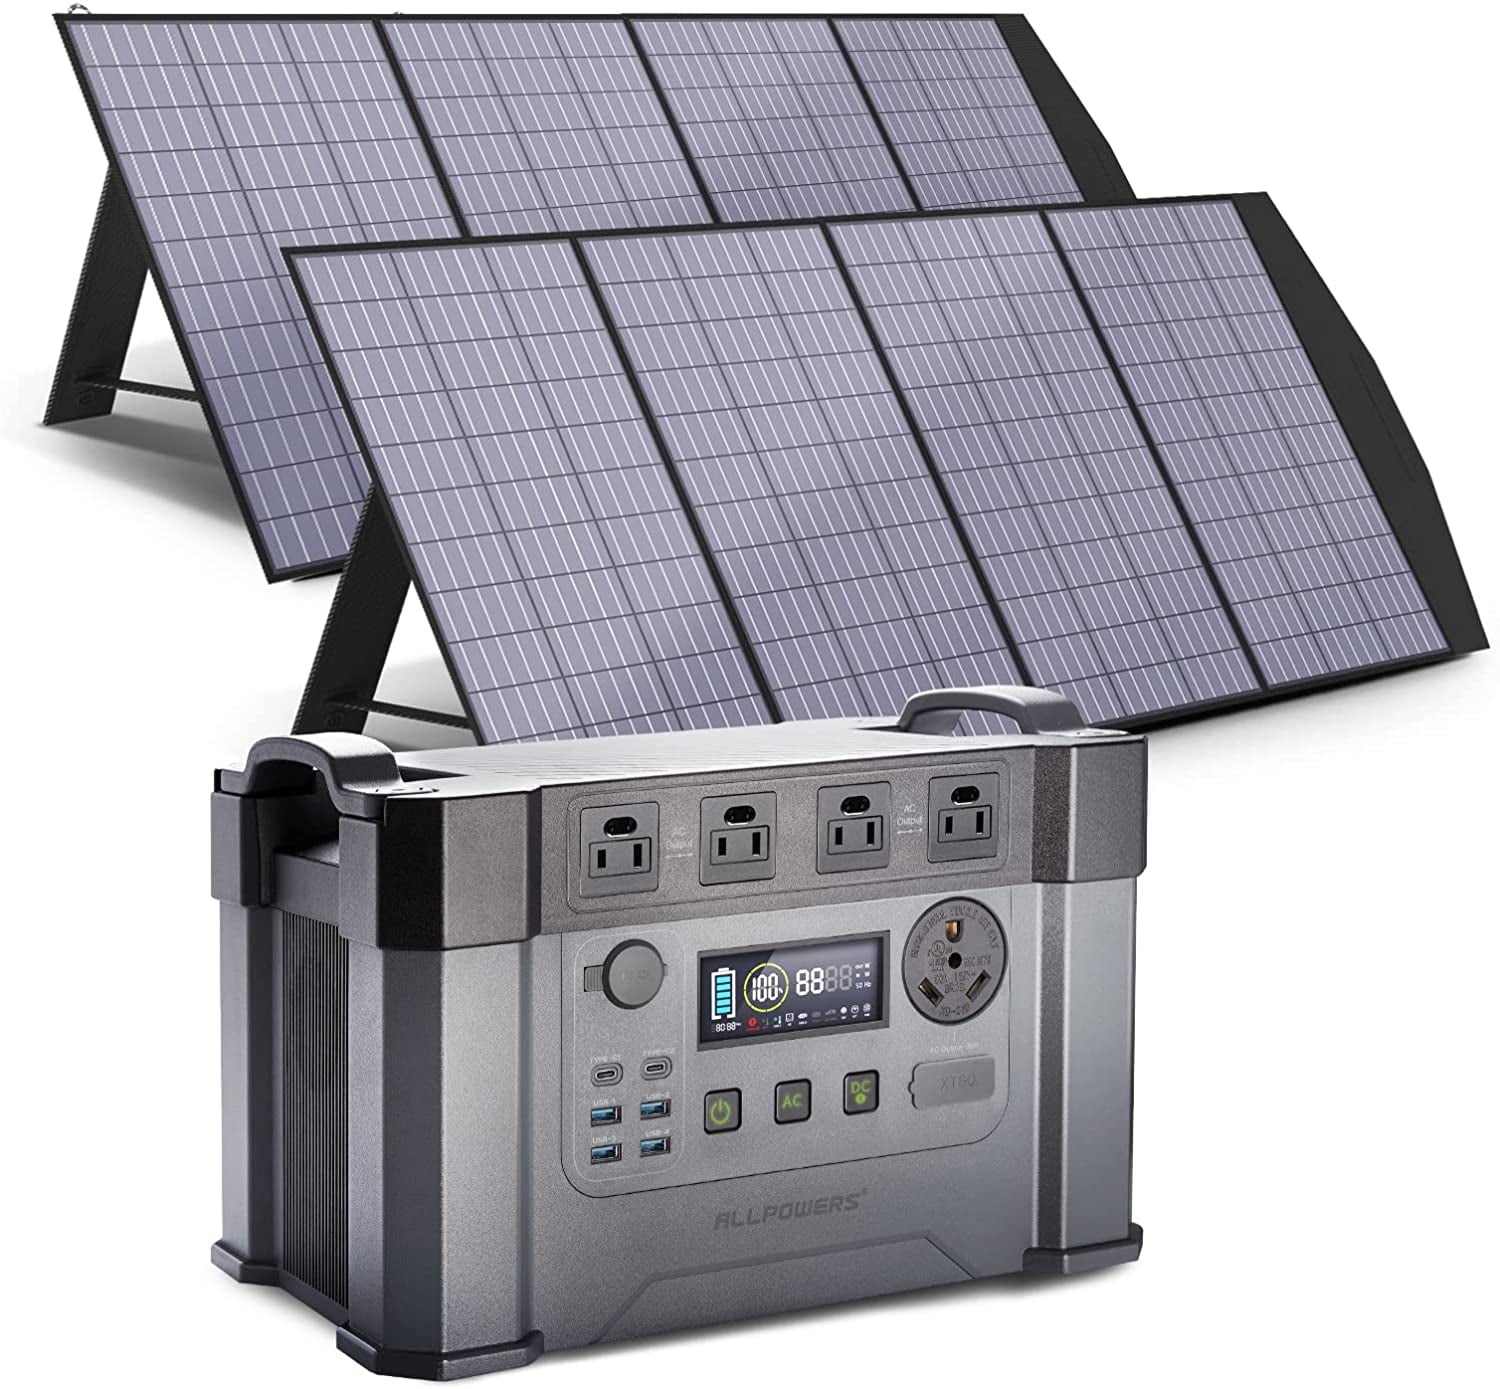 ALLPOWERS R3500 Portable Power Station Solar Generator 200W Solar